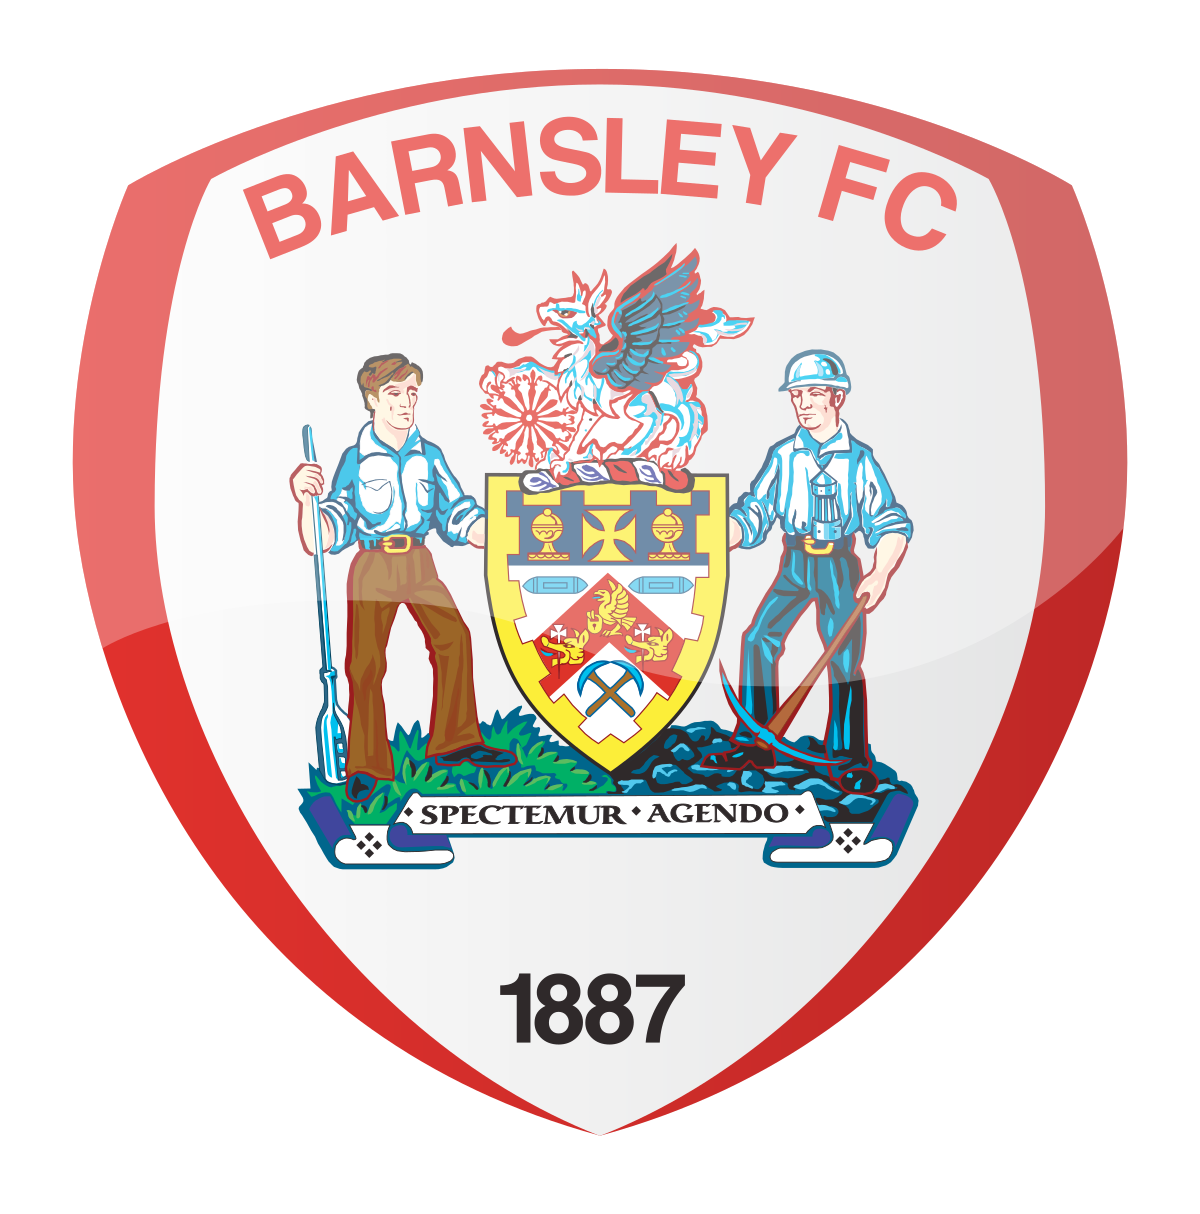 Barnsley FC - Wikipedia